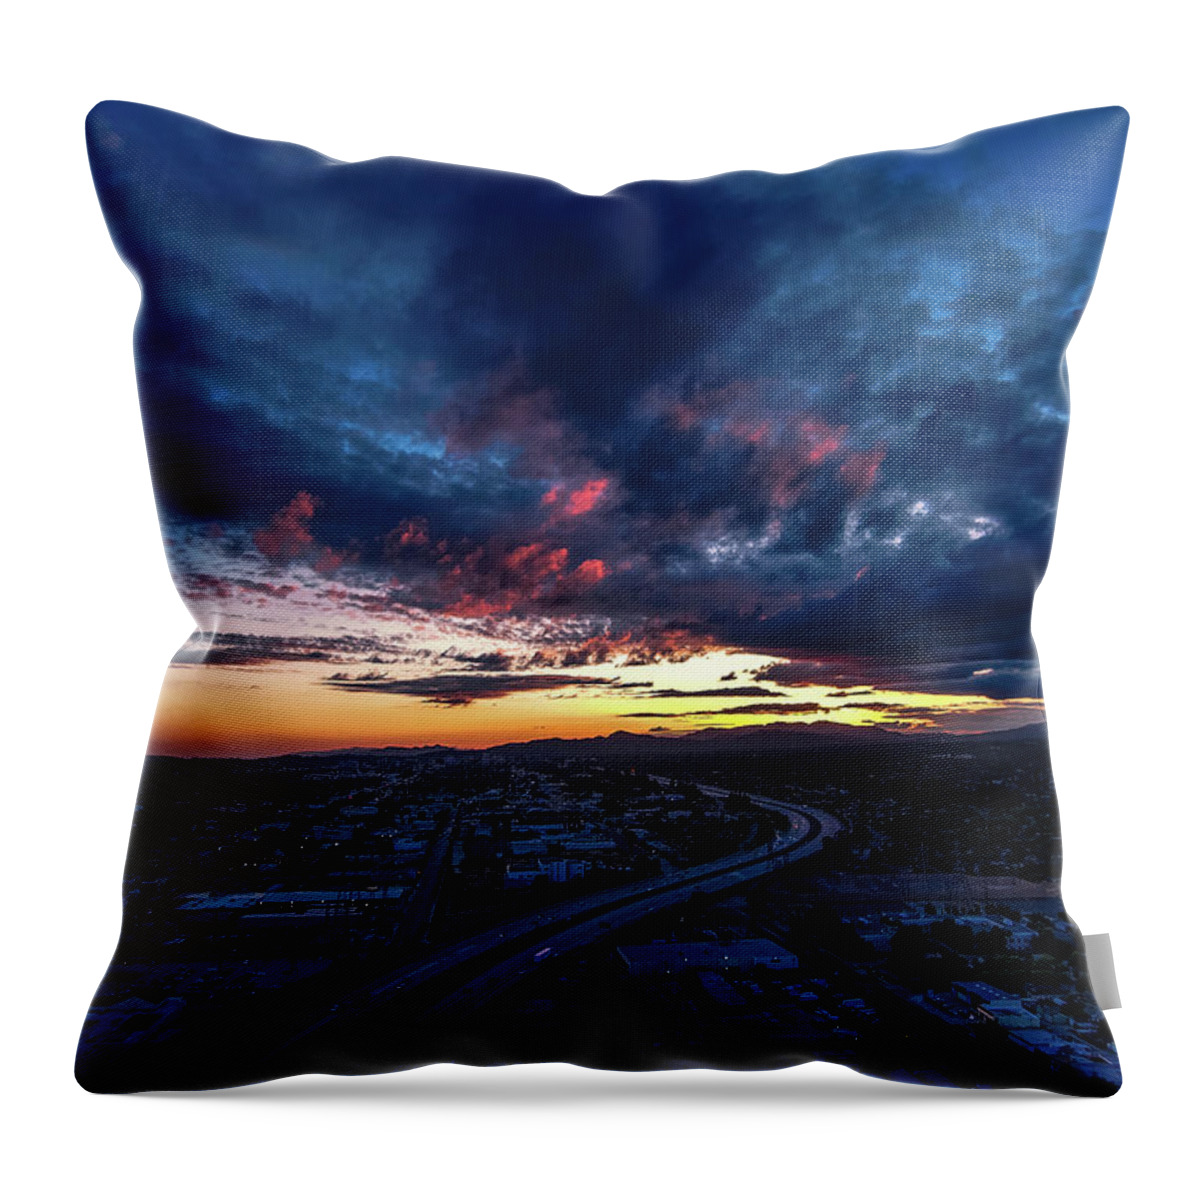 Sunset Throw Pillow featuring the photograph Midnight Sunet by Marcus Jones